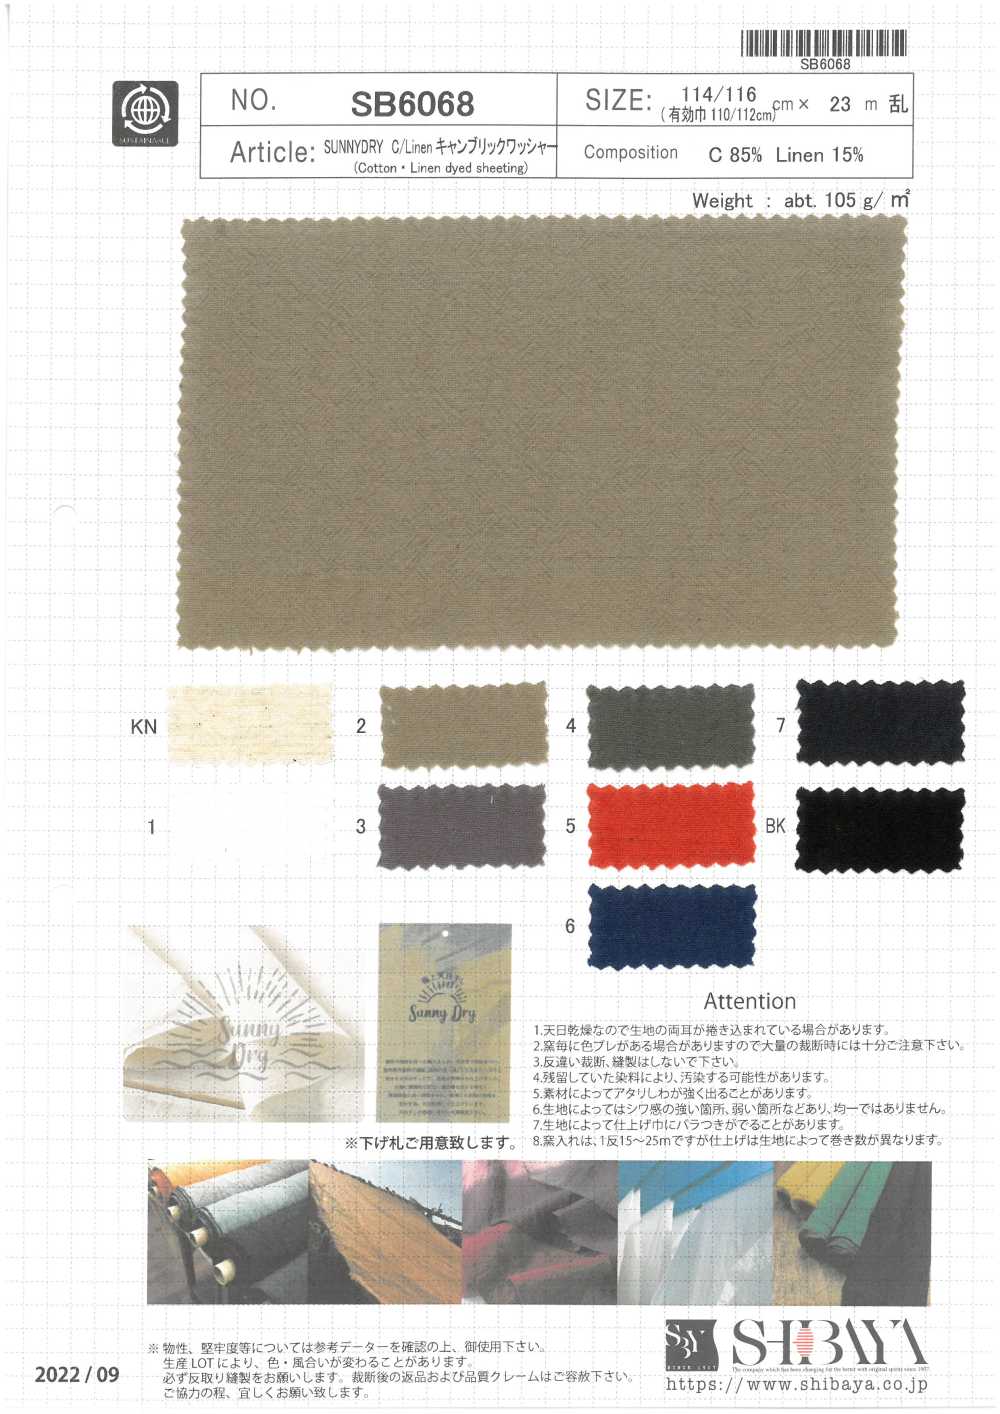 SB6068 SUNNYDRY Algodón Lino Cambric Lavadora Procesamiento[Fabrica Textil] SHIBAYA